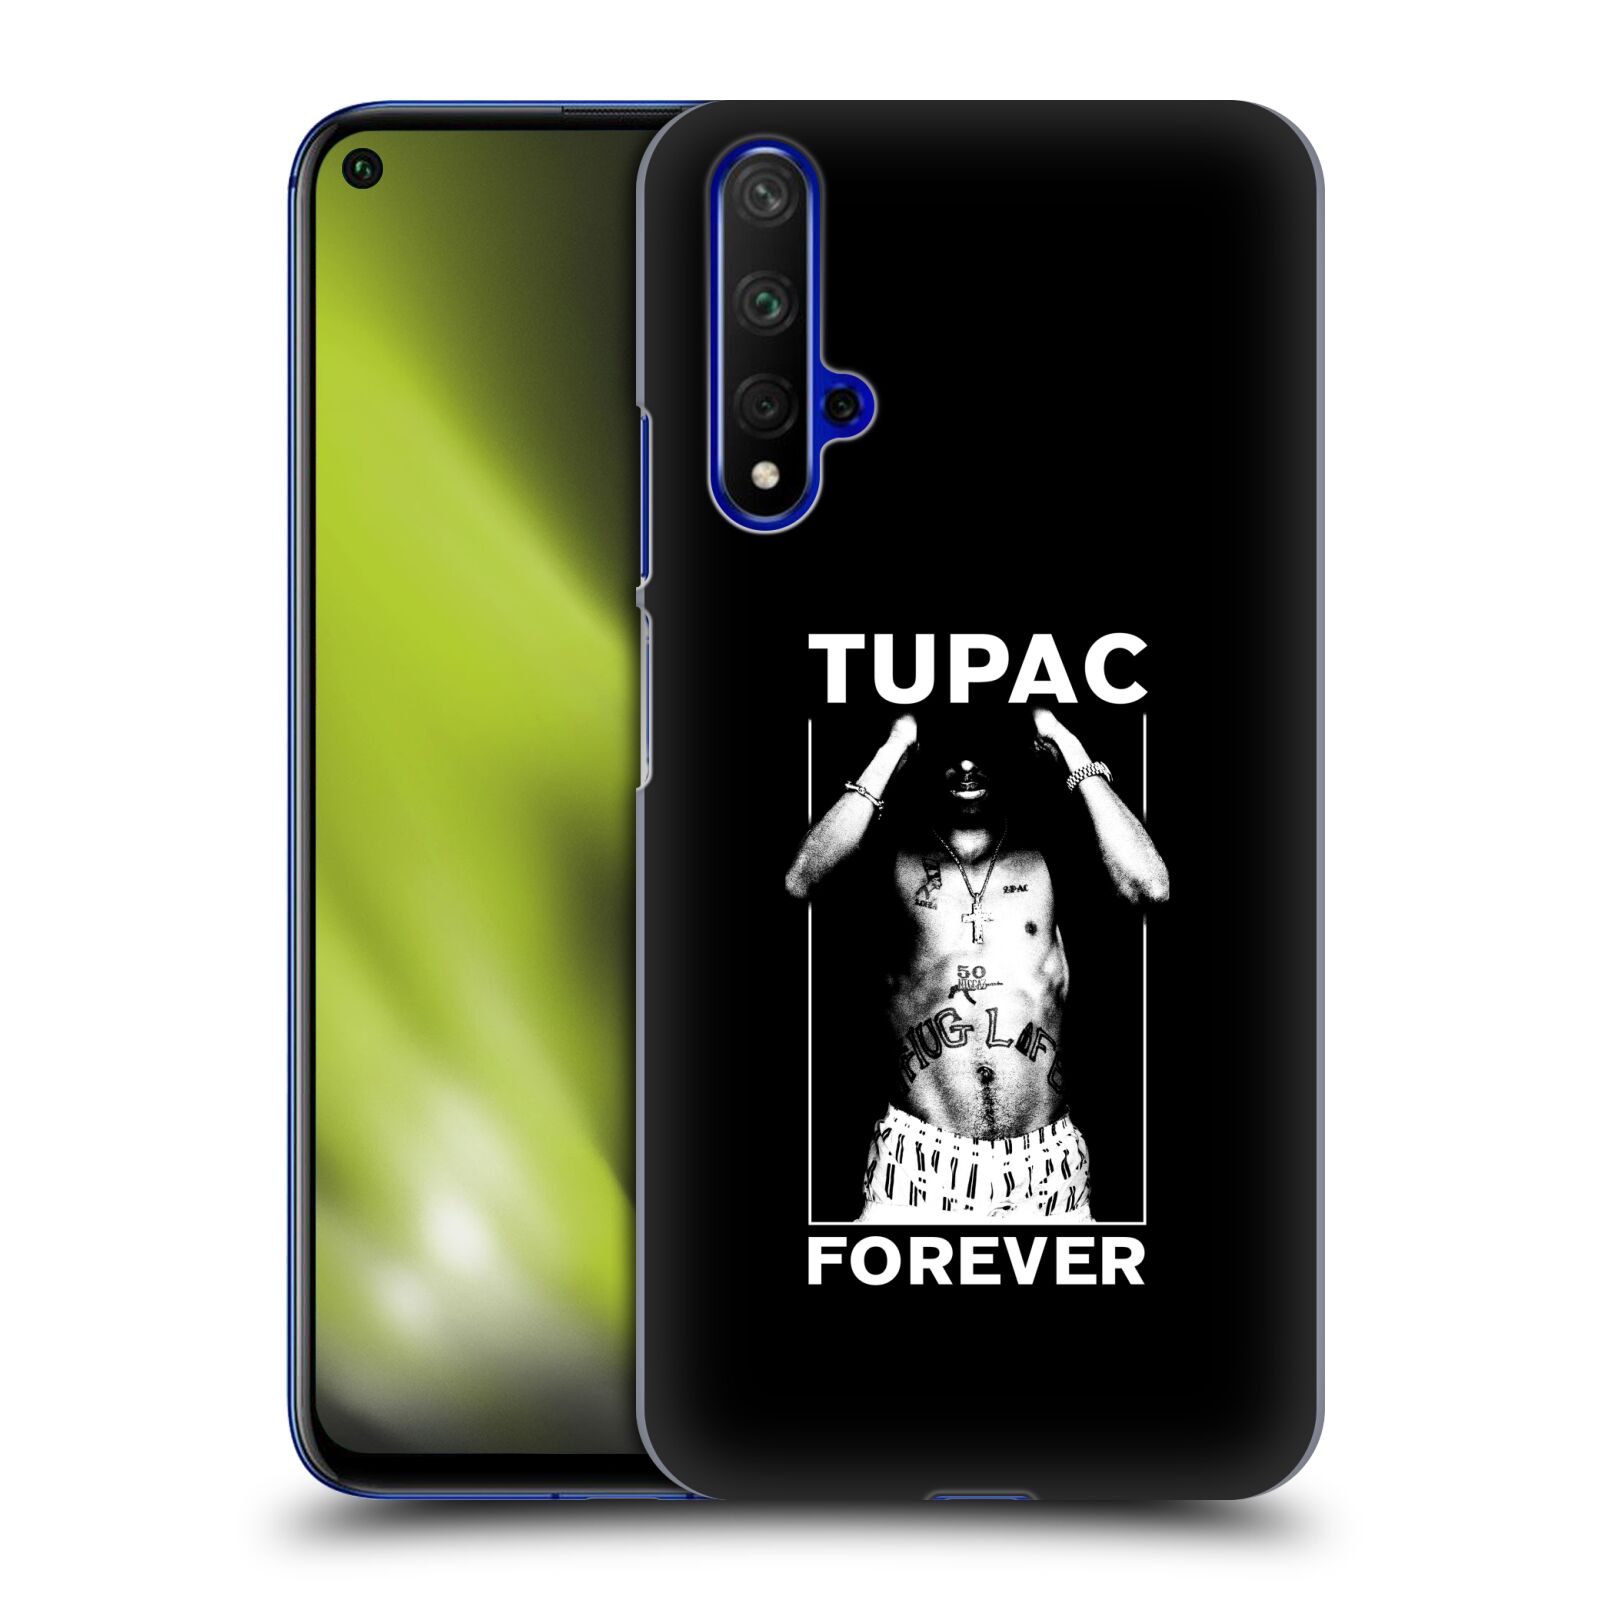 Pouzdro na mobil Honor 20 - HEAD CASE - Zpěvák rapper Tupac Shakur 2Pac bílý popisek FOREVER